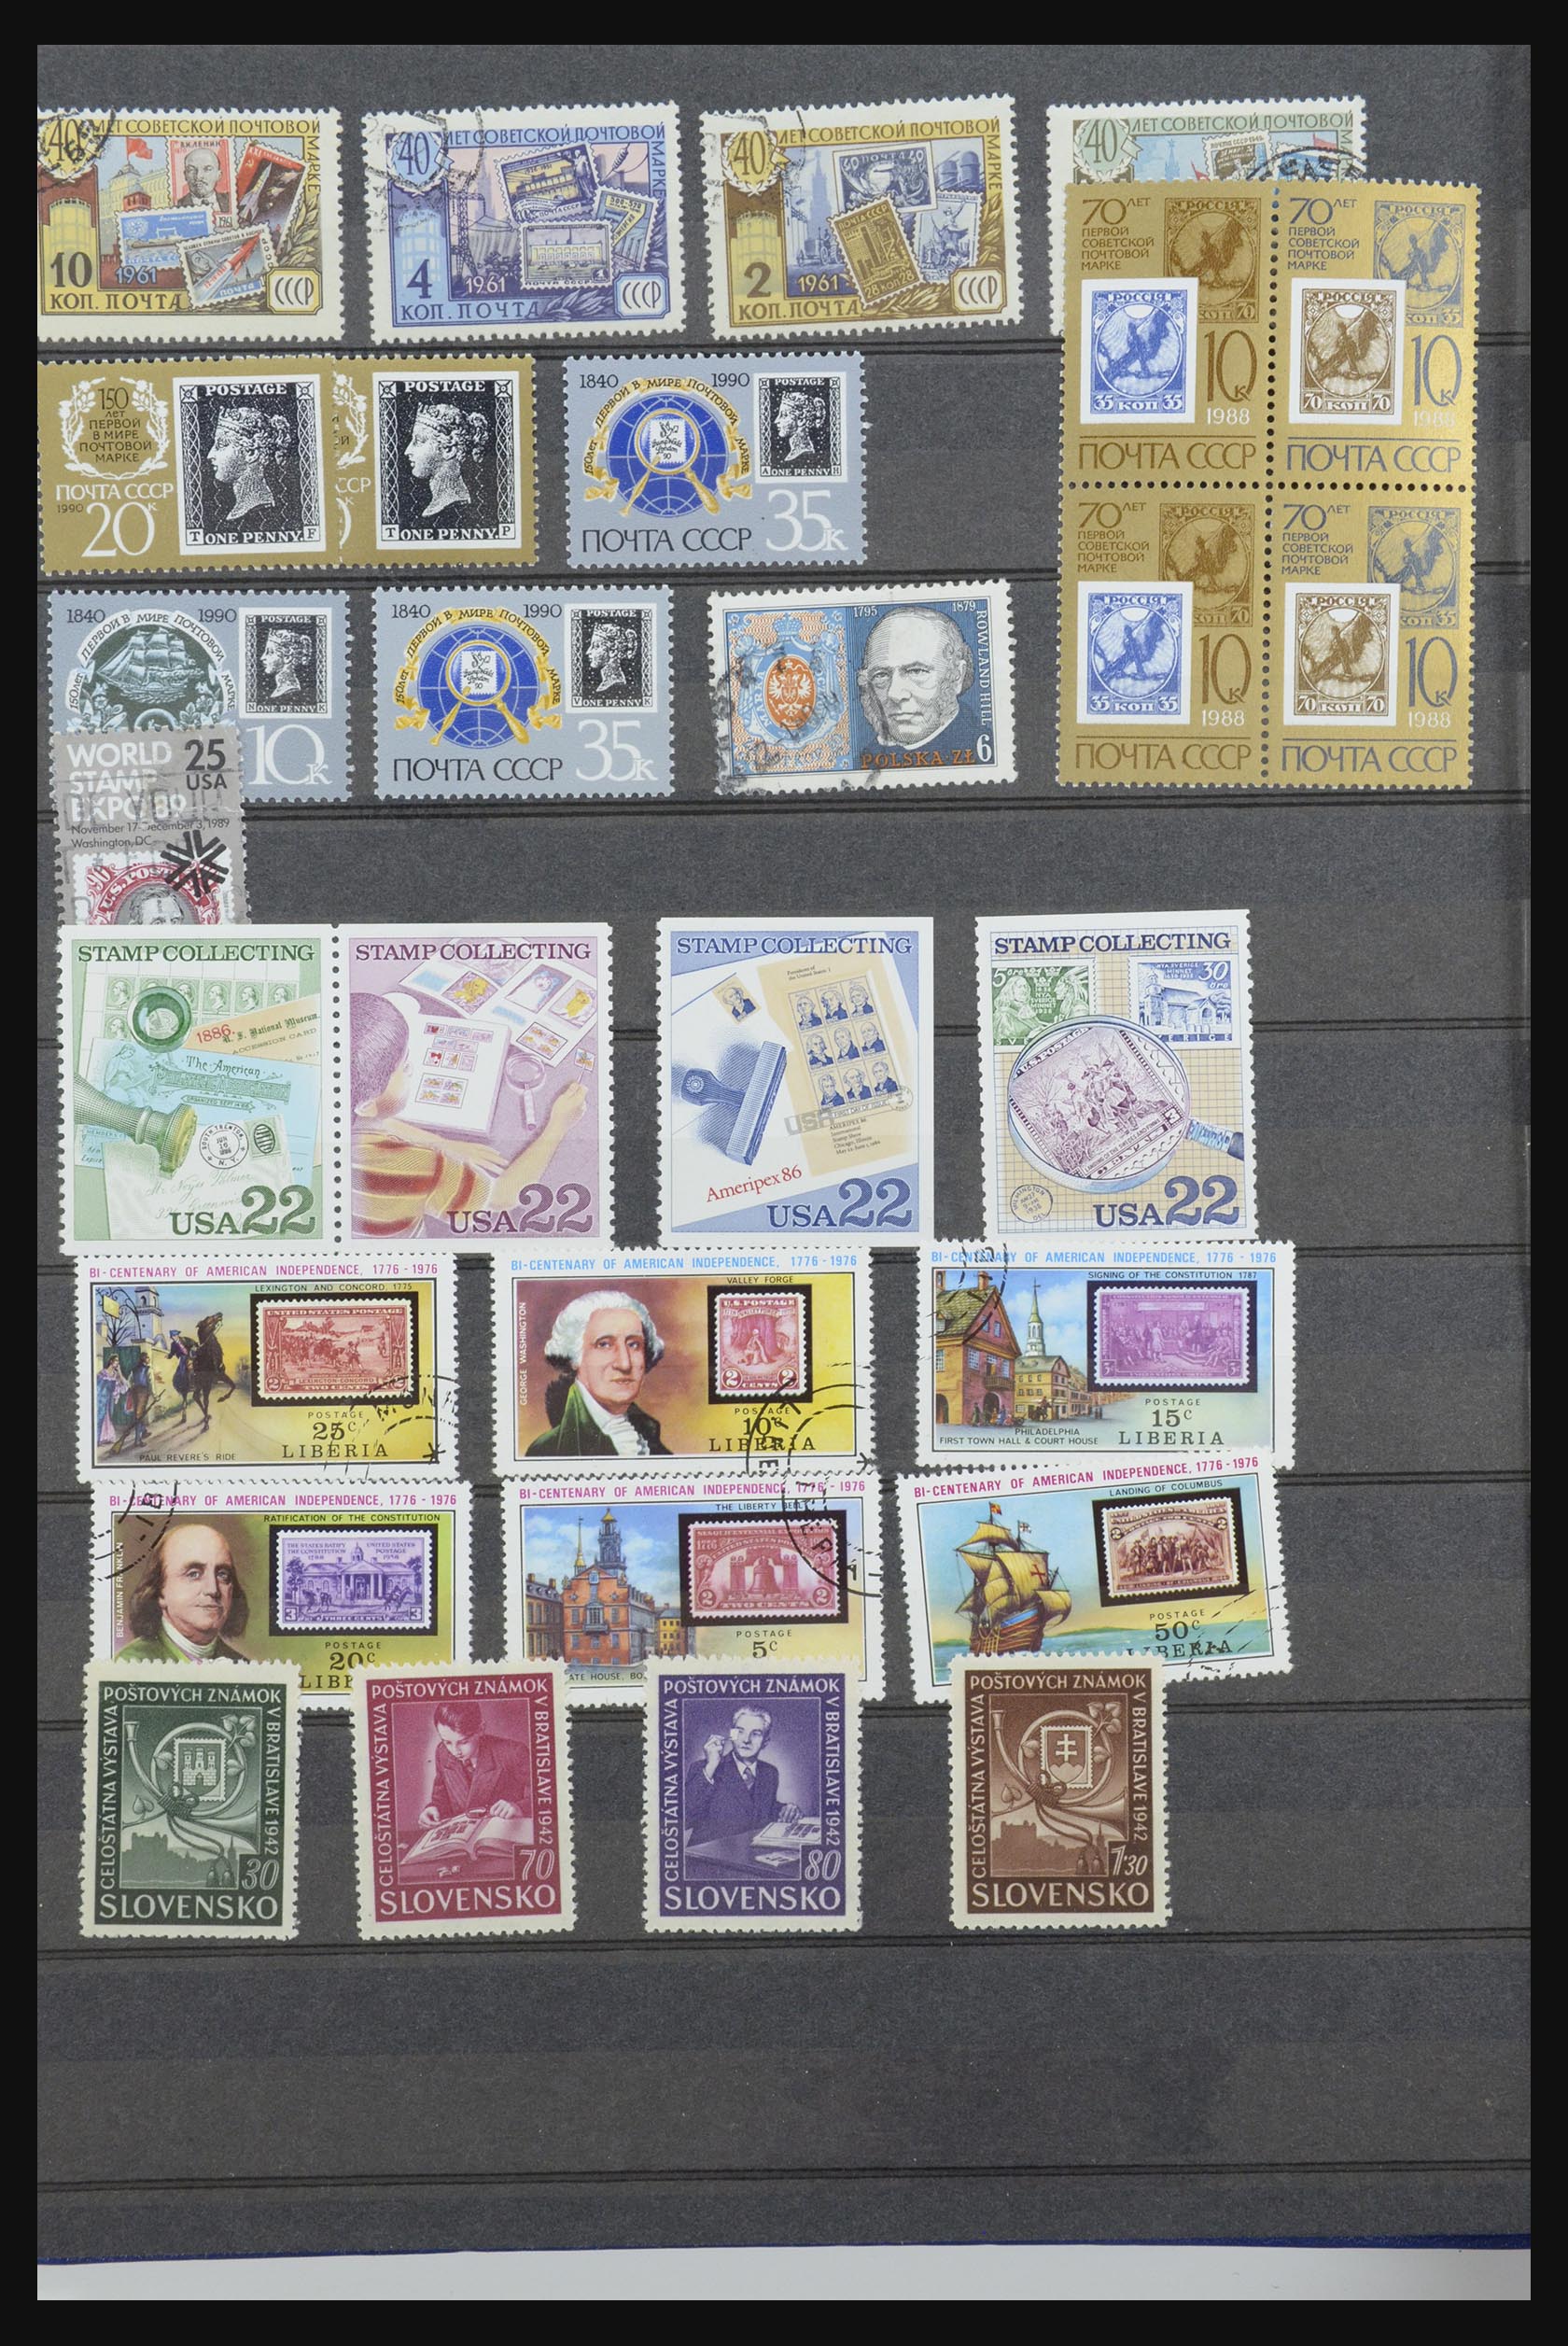 31652 059 - 31652 Motief: postzegel op postzegel 1940-1993.